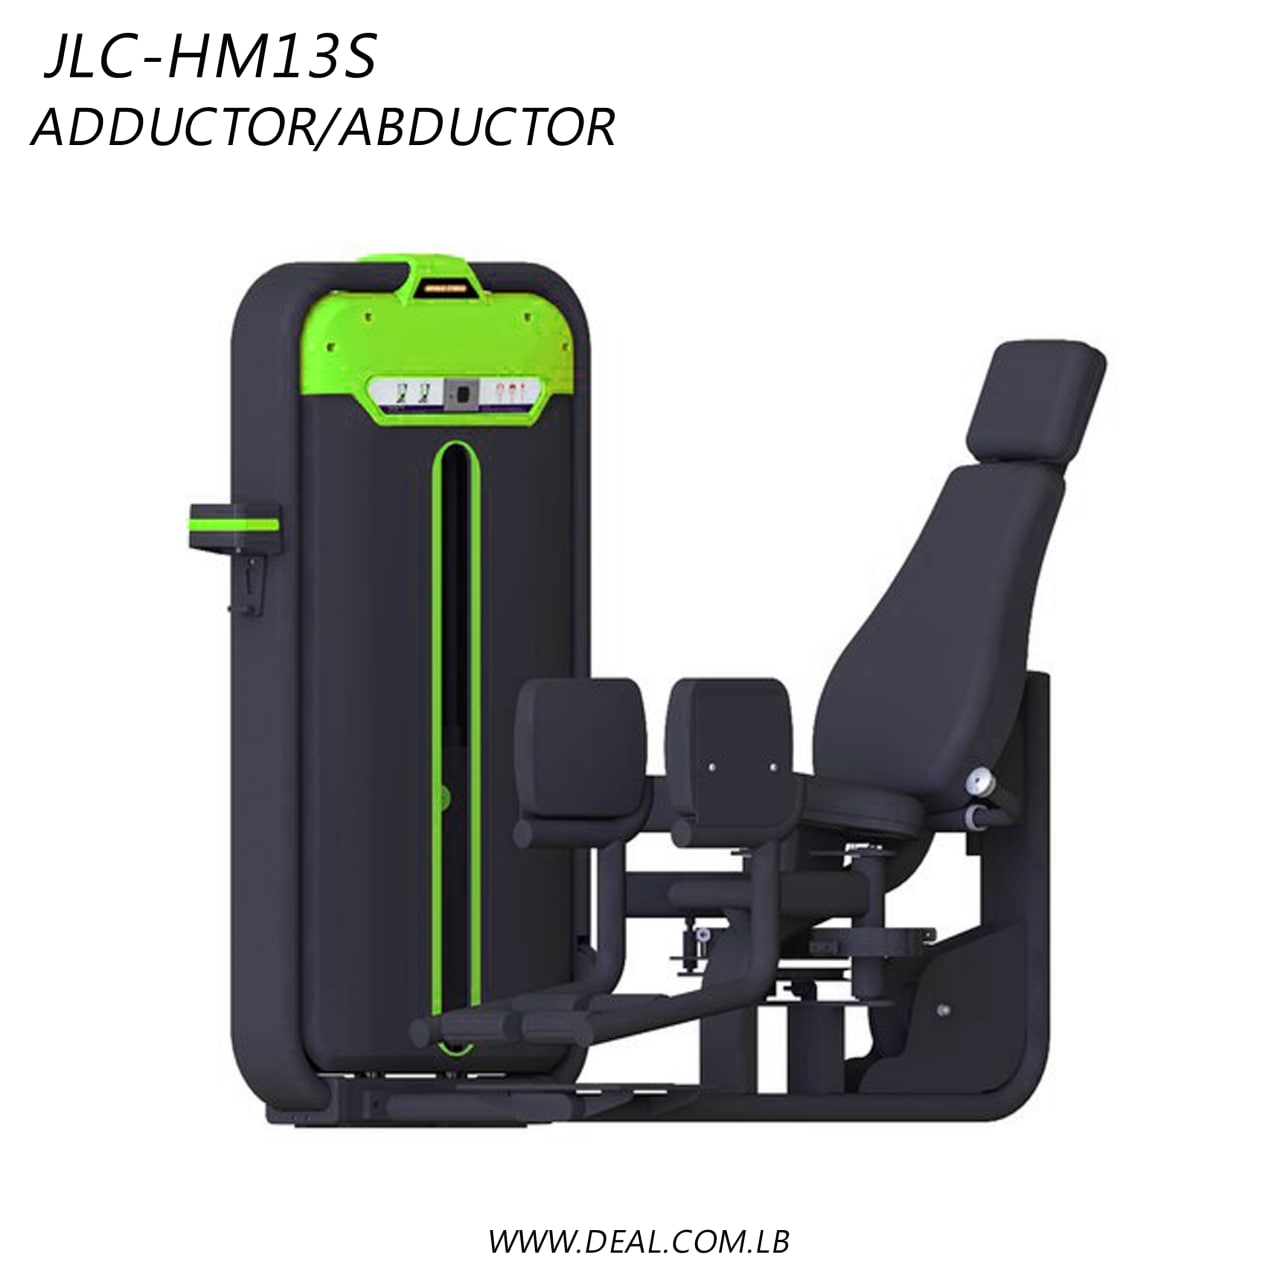 JLC-HM13S | Adductor Abductor